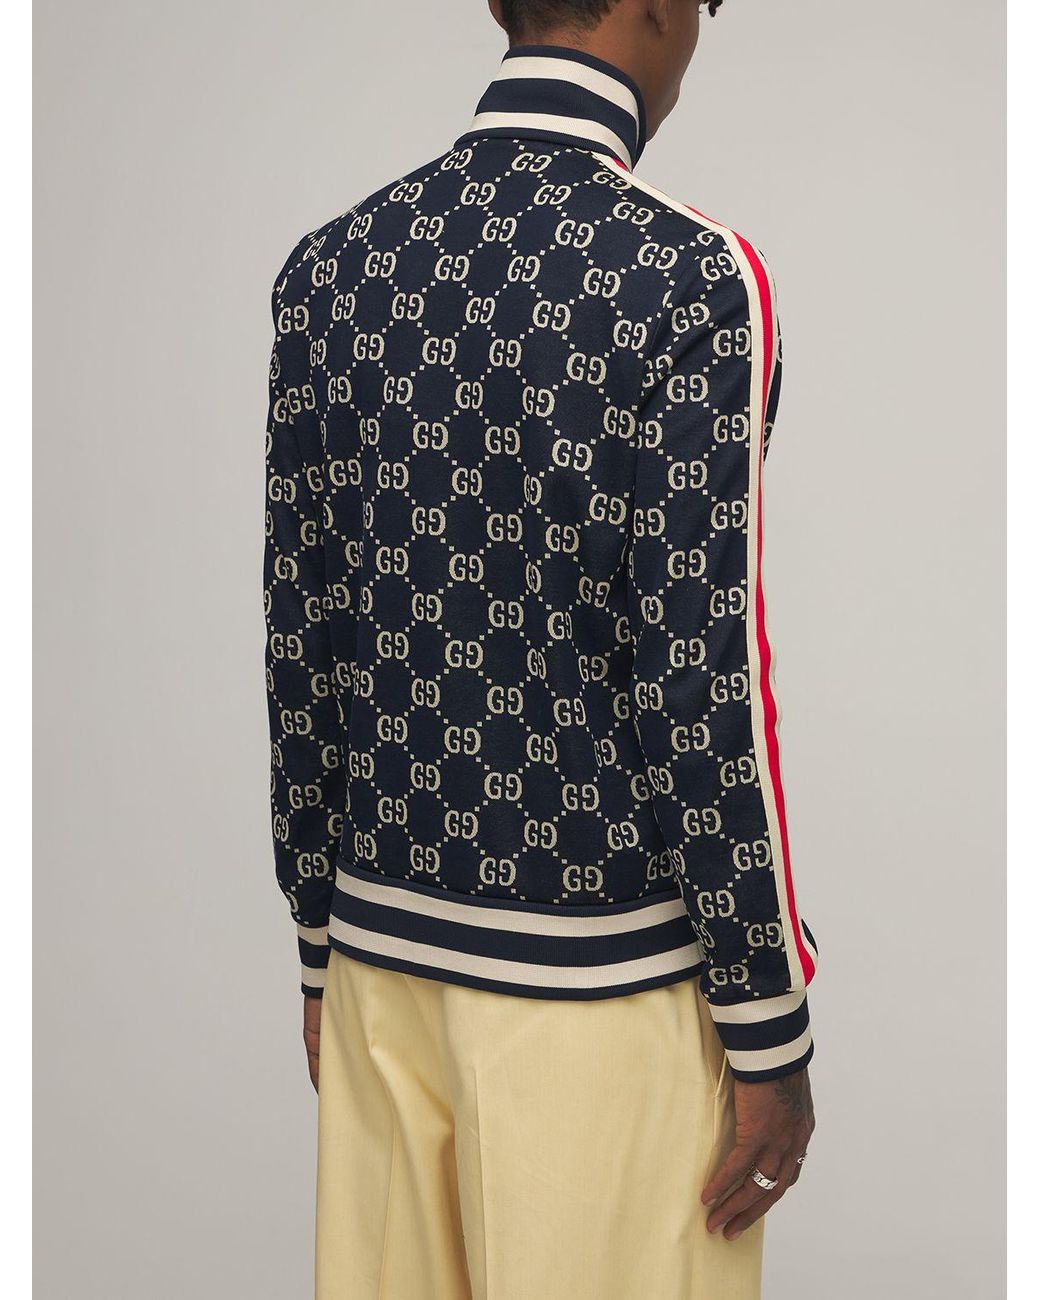 Gucci Gg Supreme Jacquard Zip-up Track Jacket for Men | Lyst